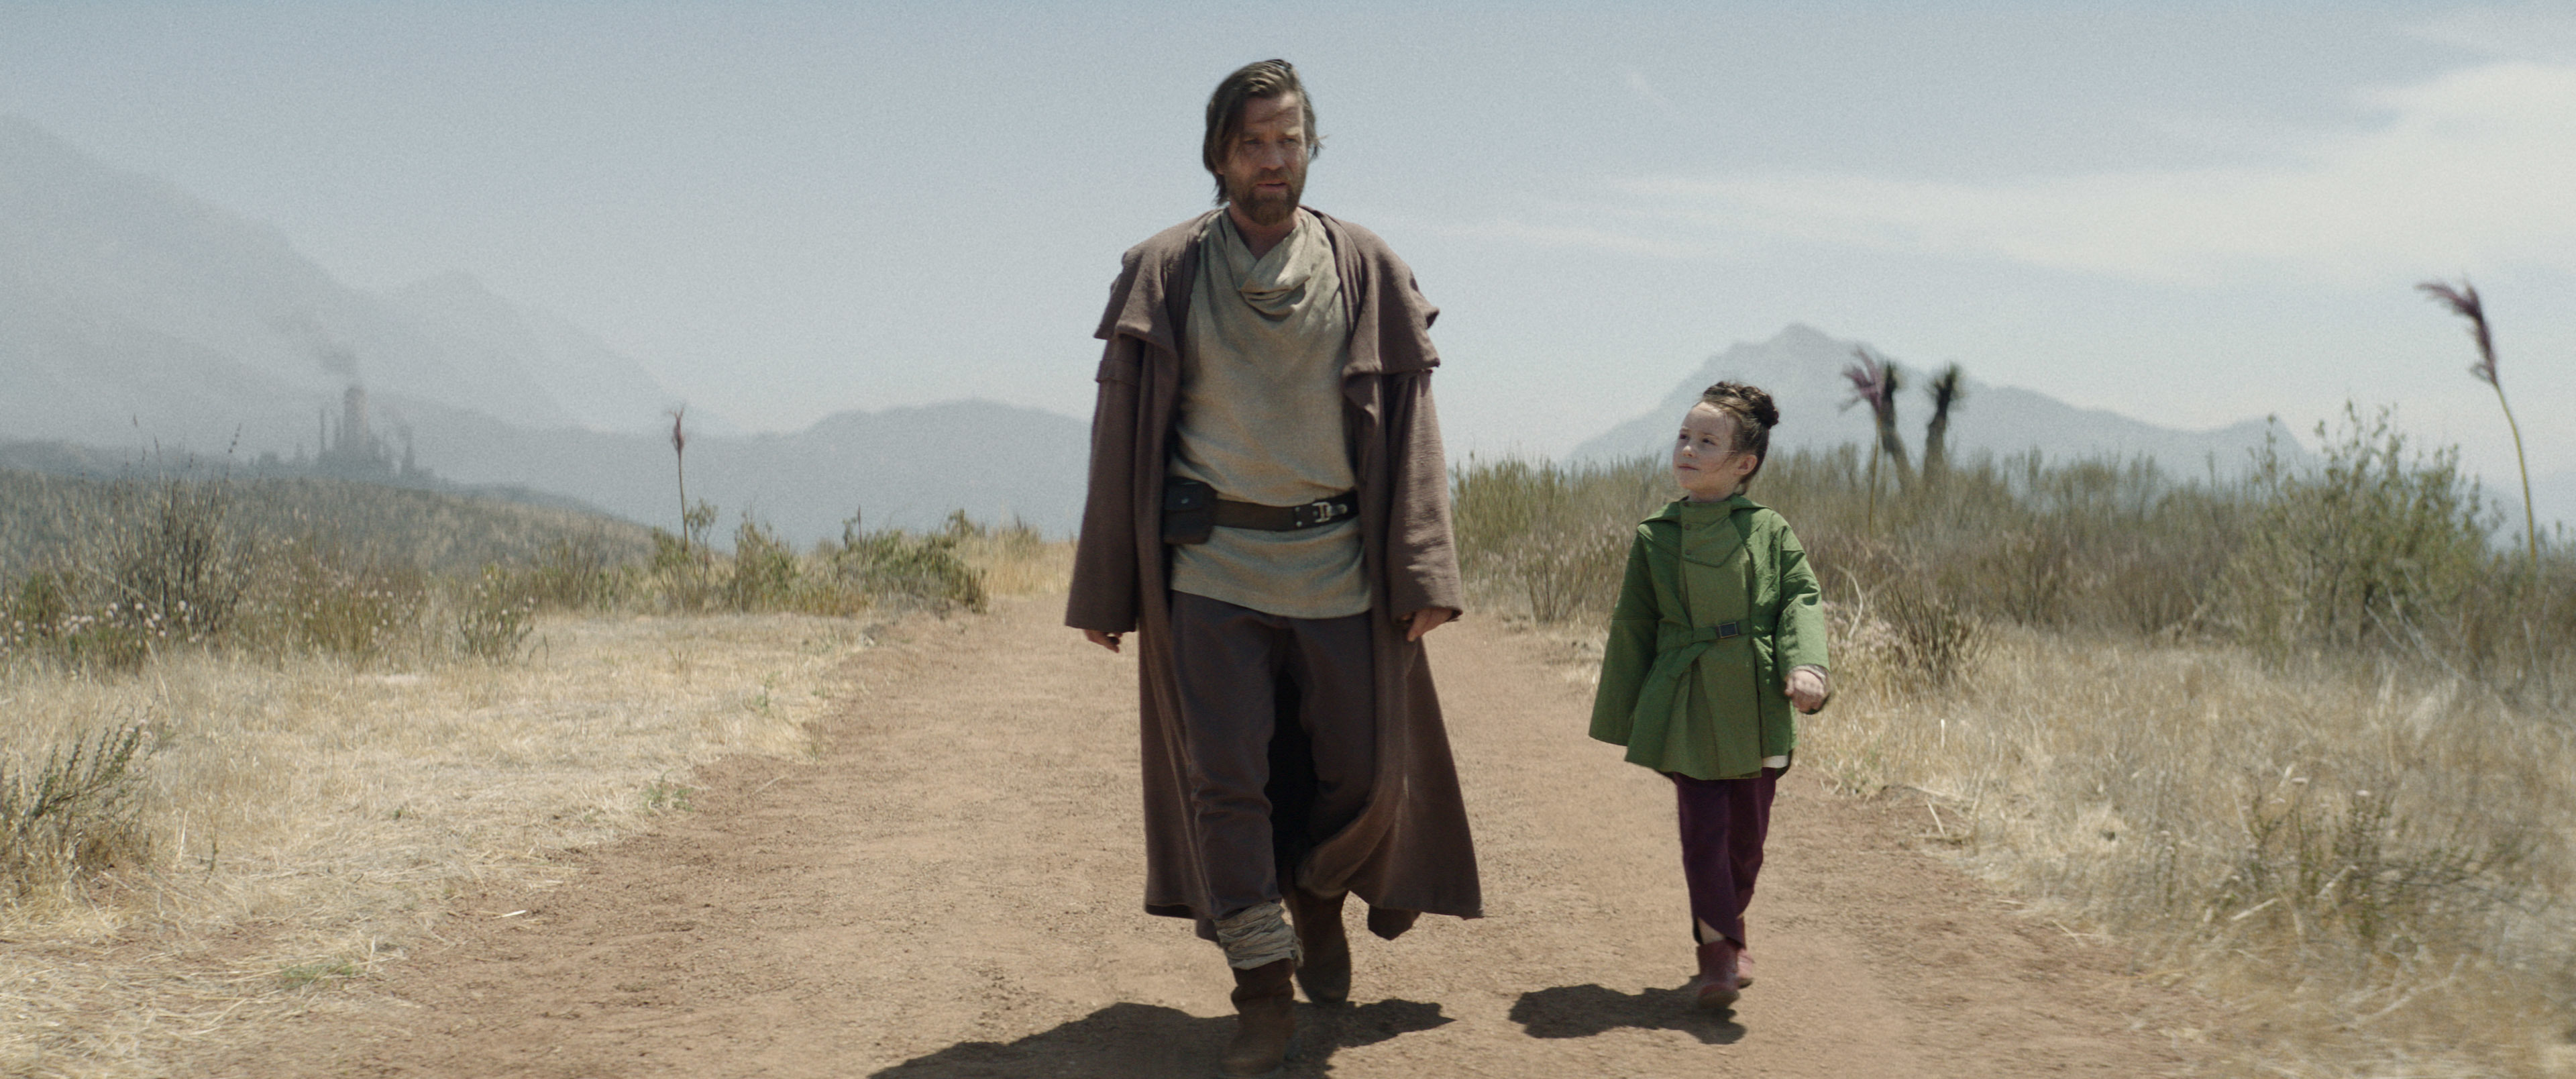 Movie actor Ewan McGregor plays Obi-Wan Kenobi and Vivien Lyra Blair plays Leia in Obi-Wan Kenobi on Disney+